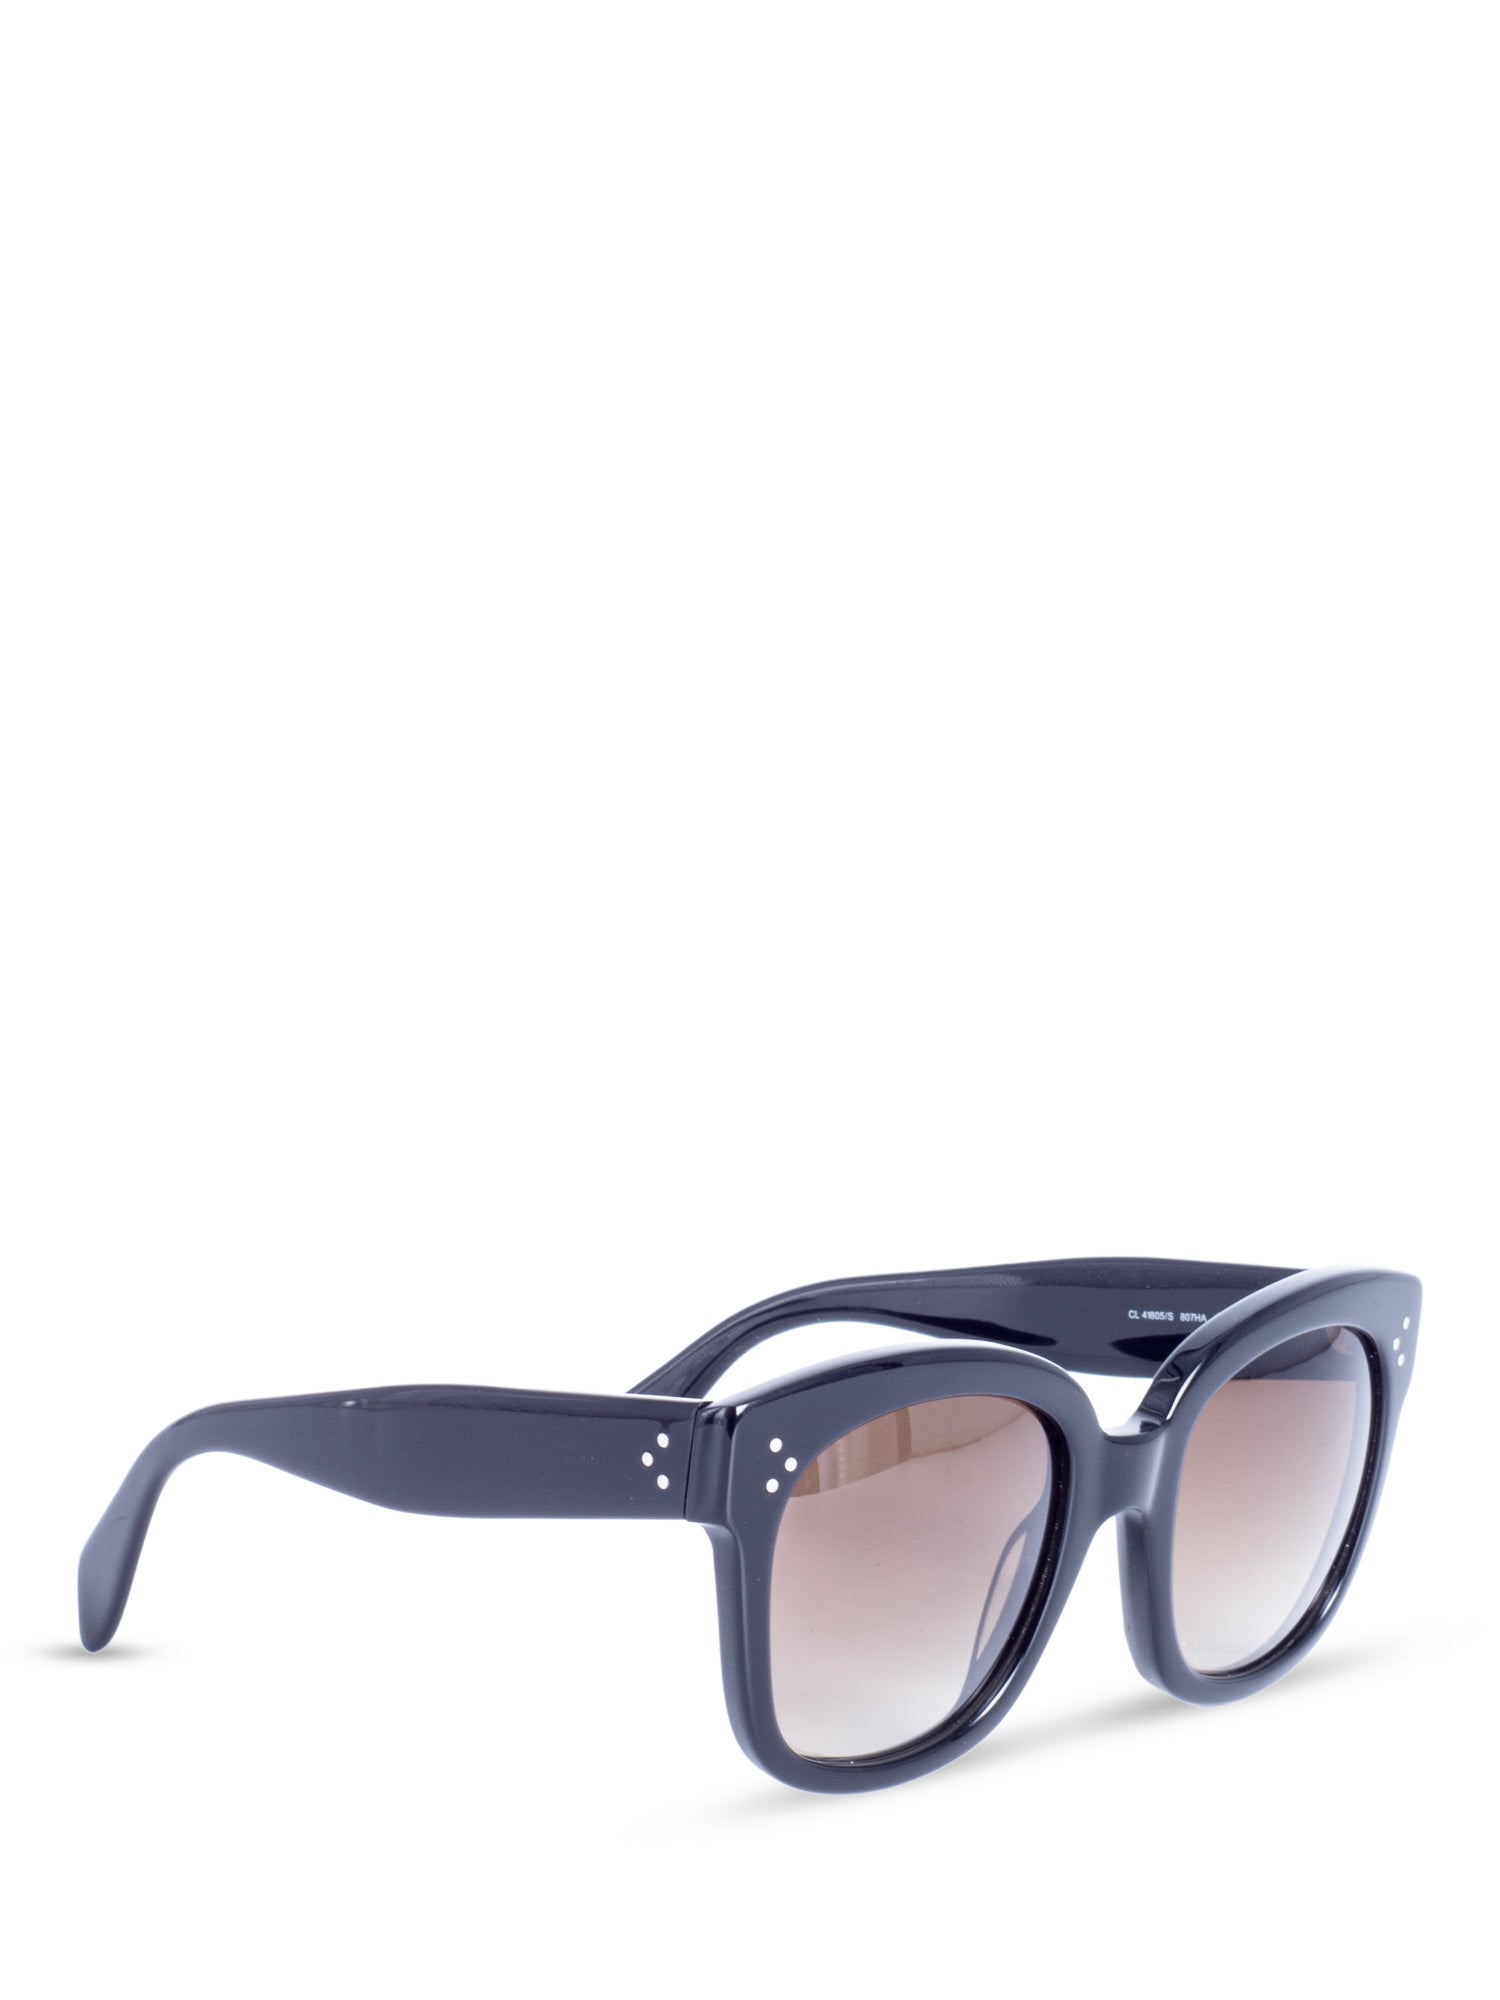 Celine Wayfarer Gradient Lenses Sunglasses Black Grey-designer resale